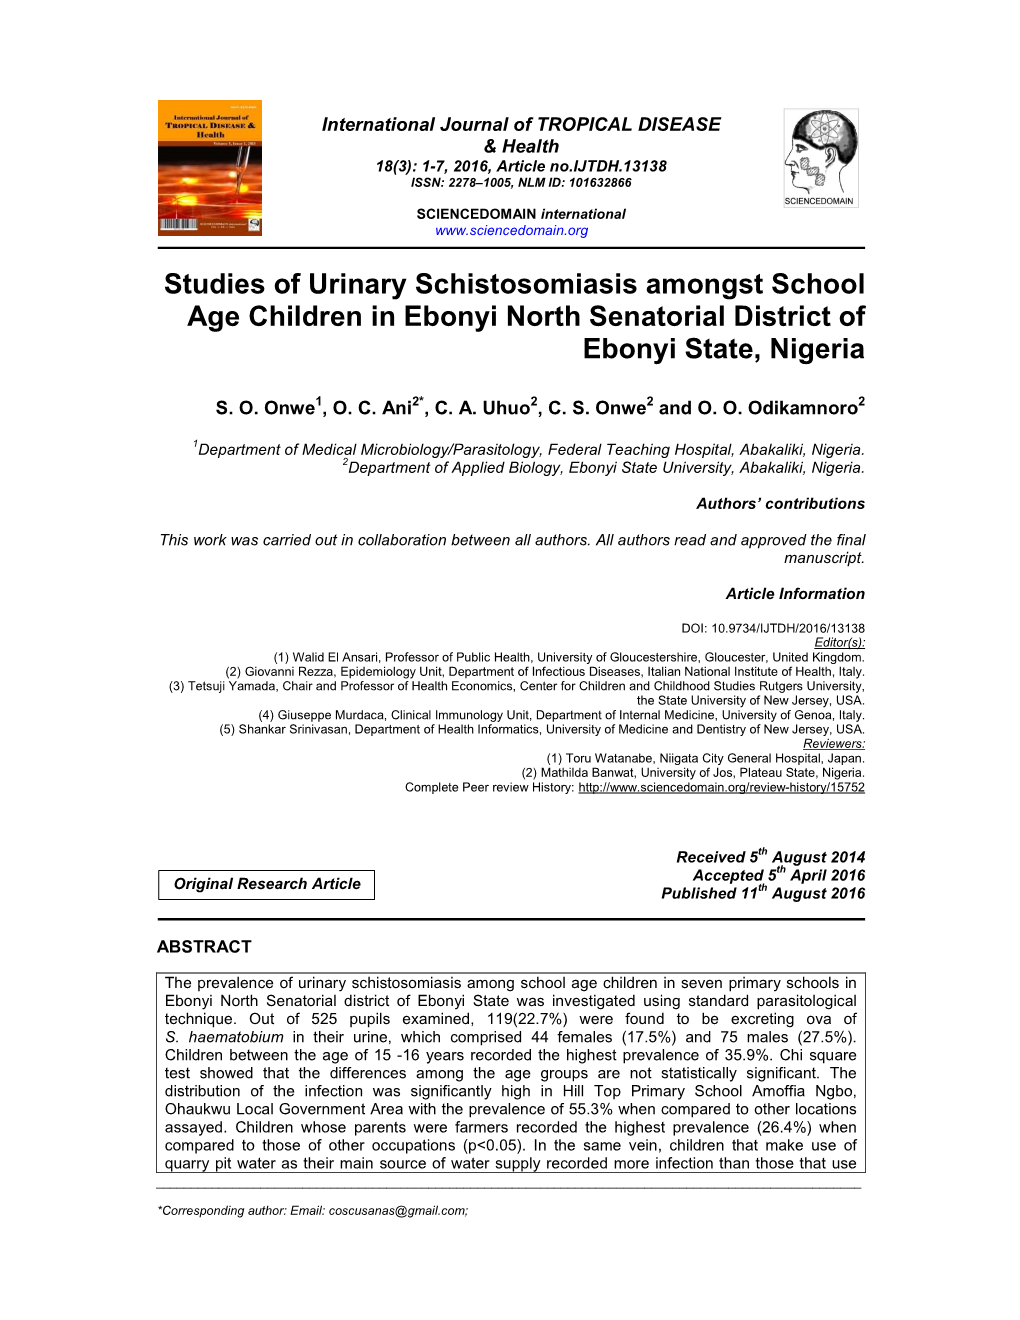 Studies of Urinary Schistosomiasis Amongst School Age Children in Ebonyi North Senatorial District of Ebonyi State, Nigeria